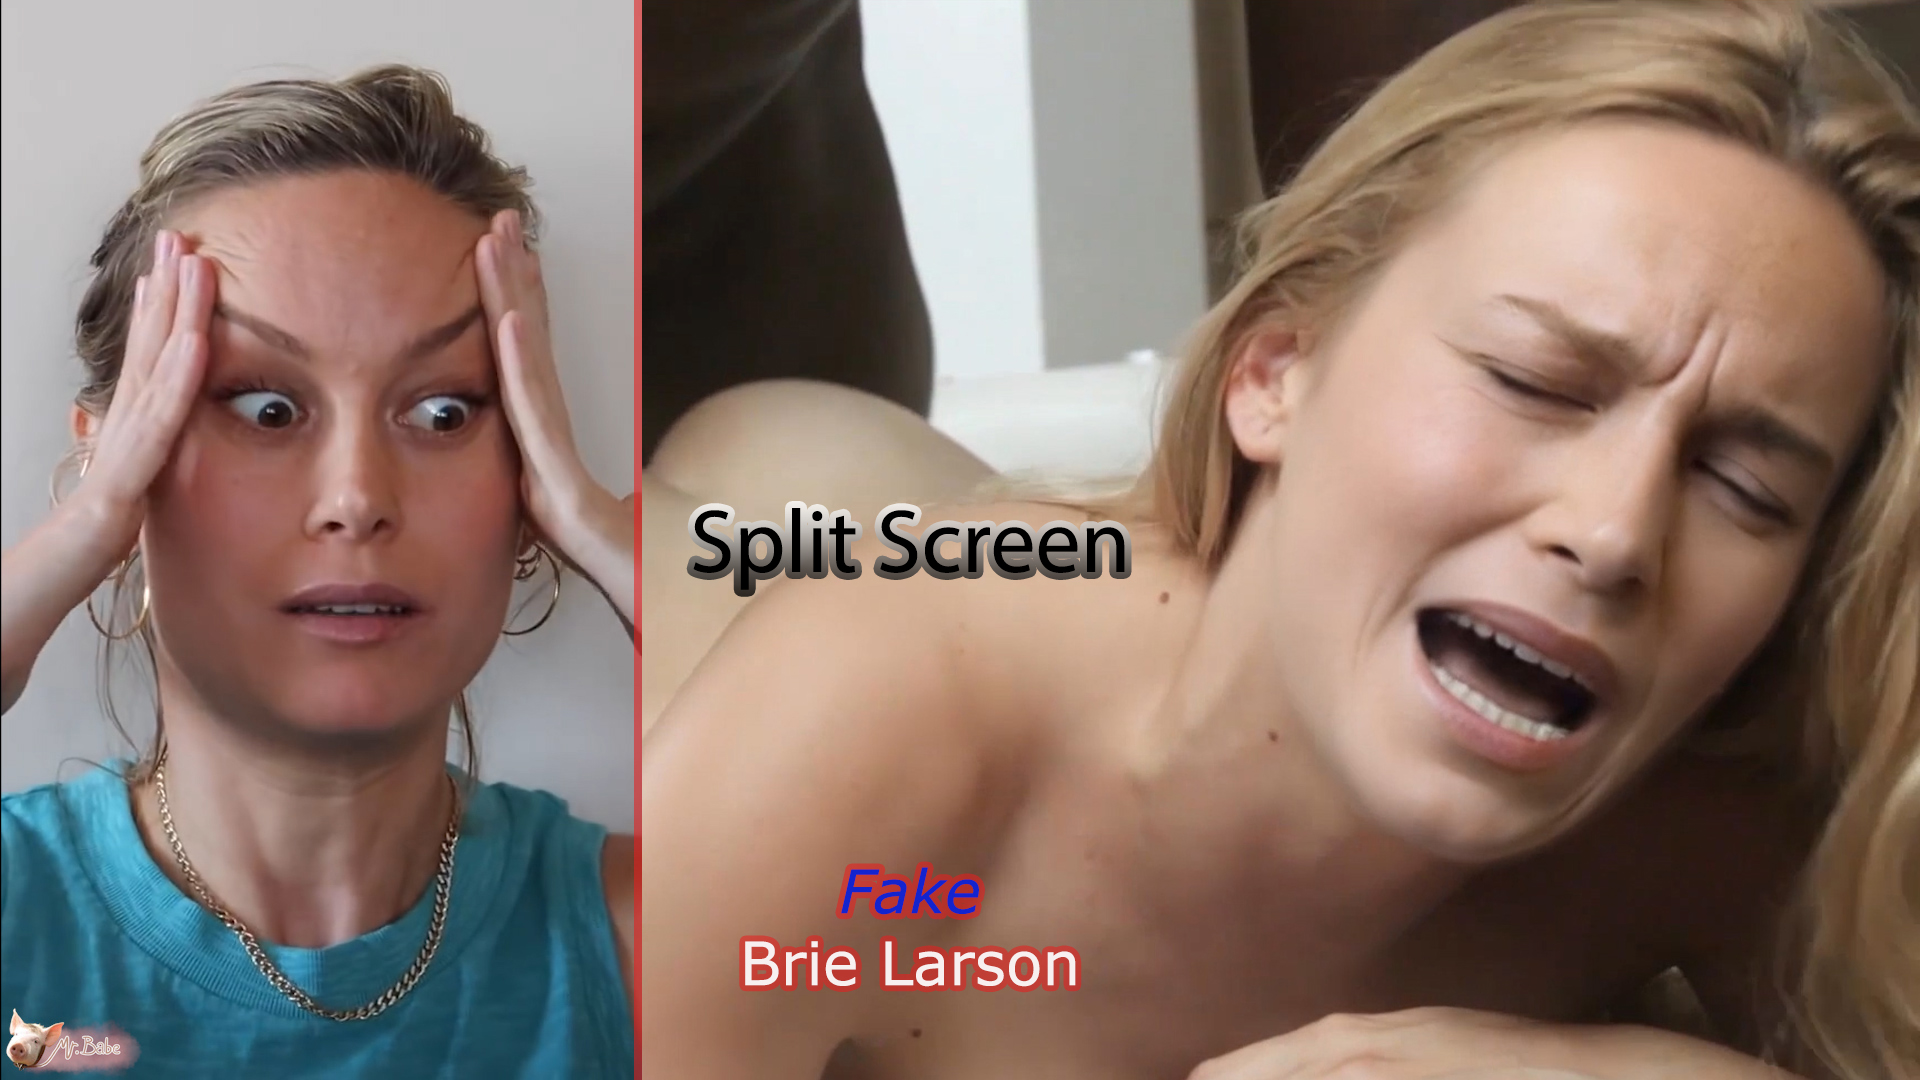 Fake Brie Larson -(trailer)- 3 - / Split Screen / Free Download